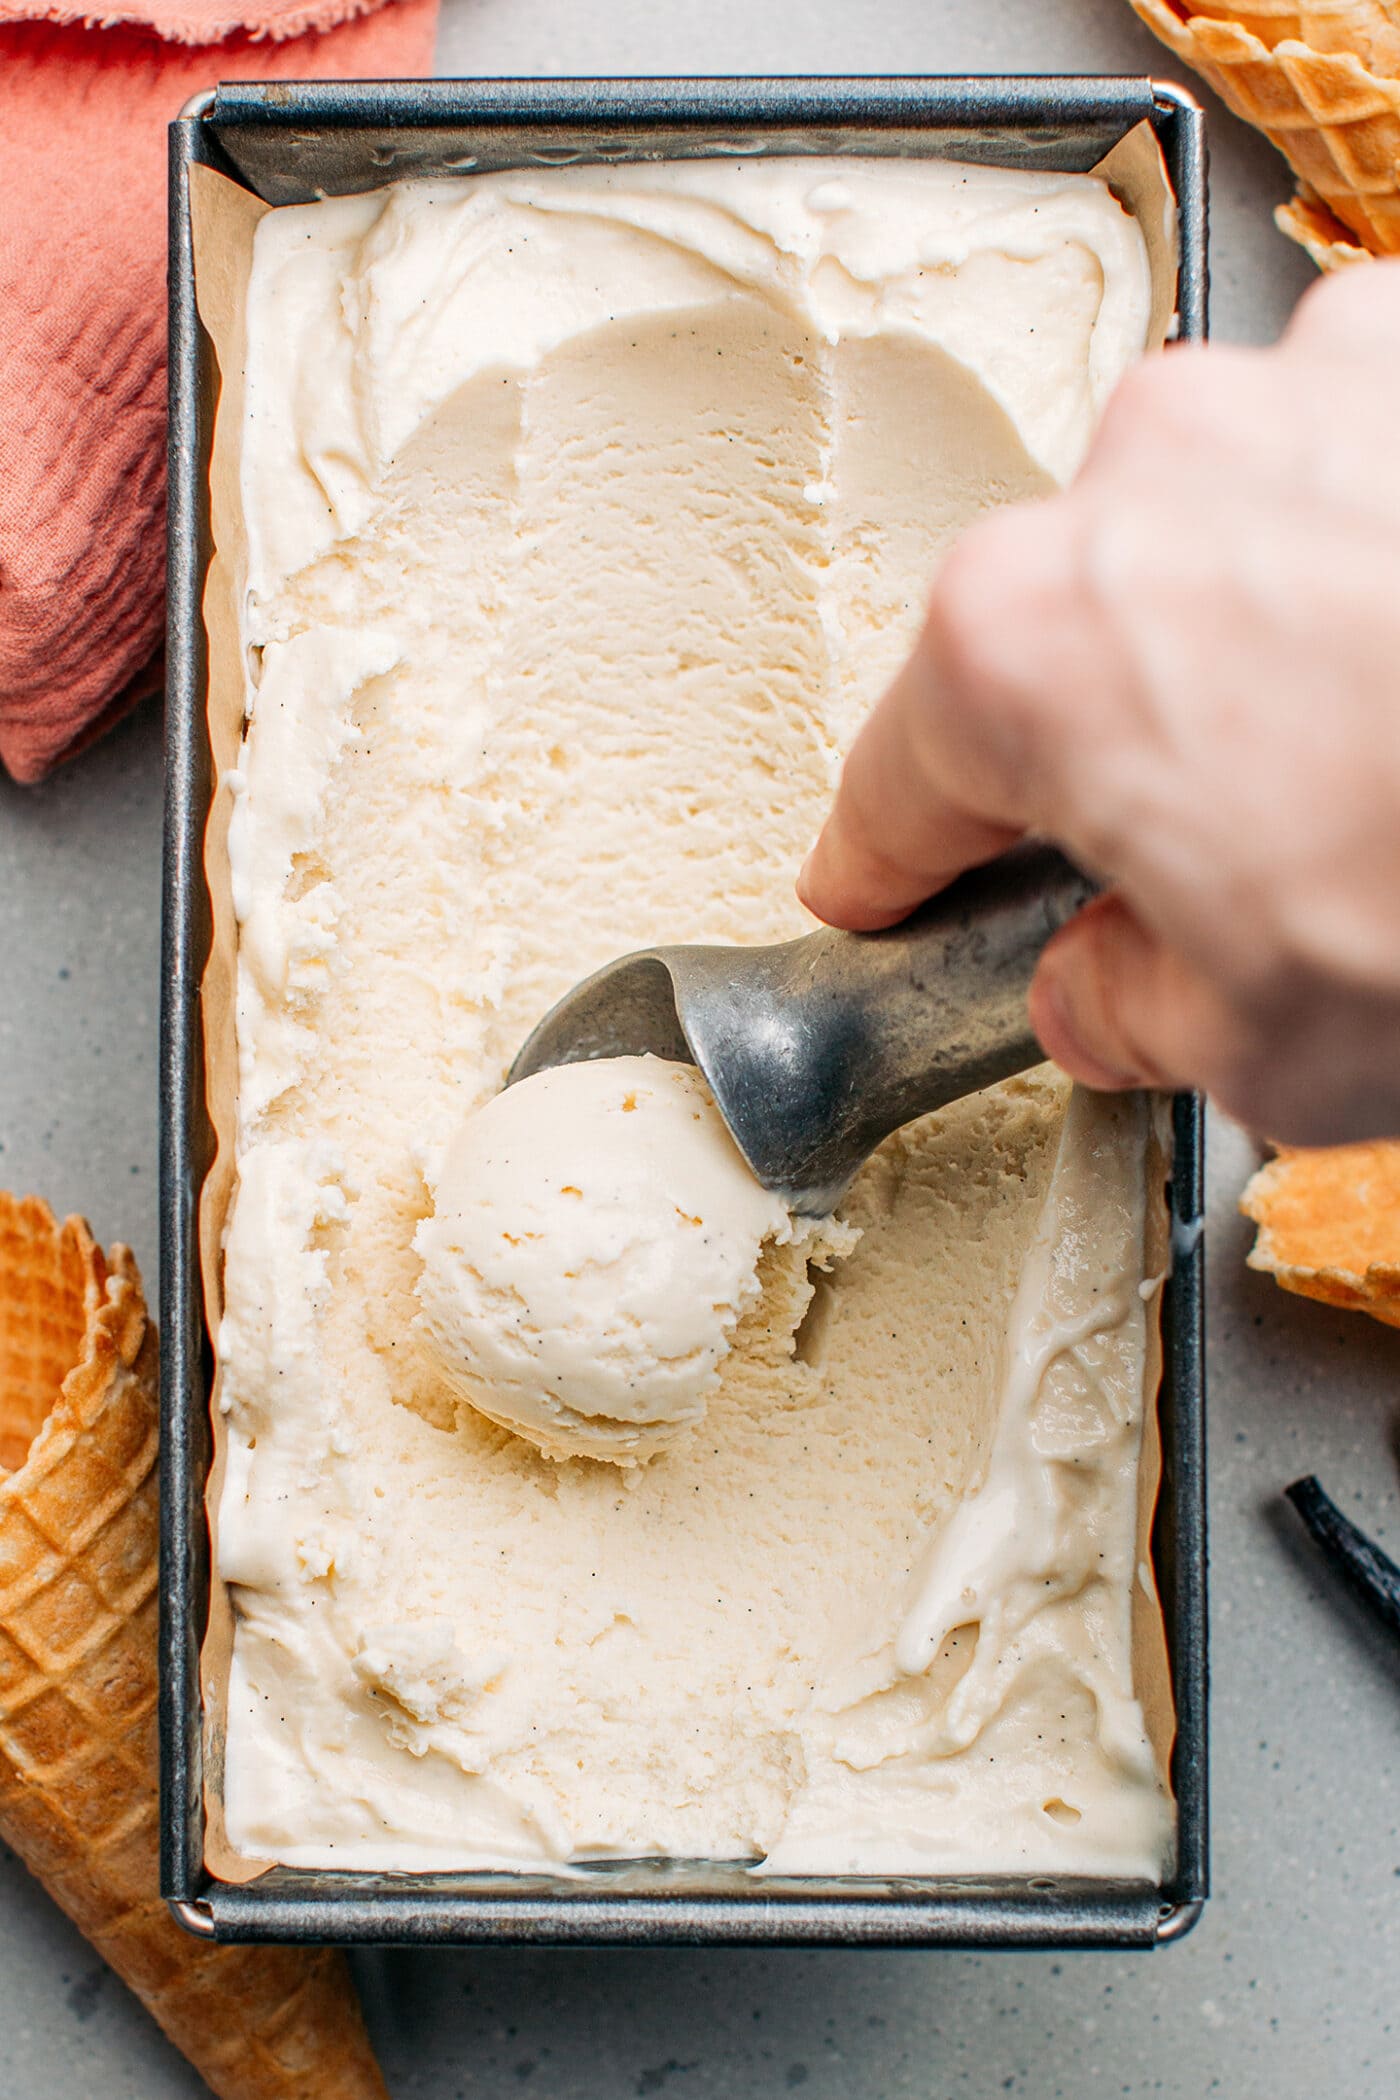 Scooping vanilla ice cream with a scoop.